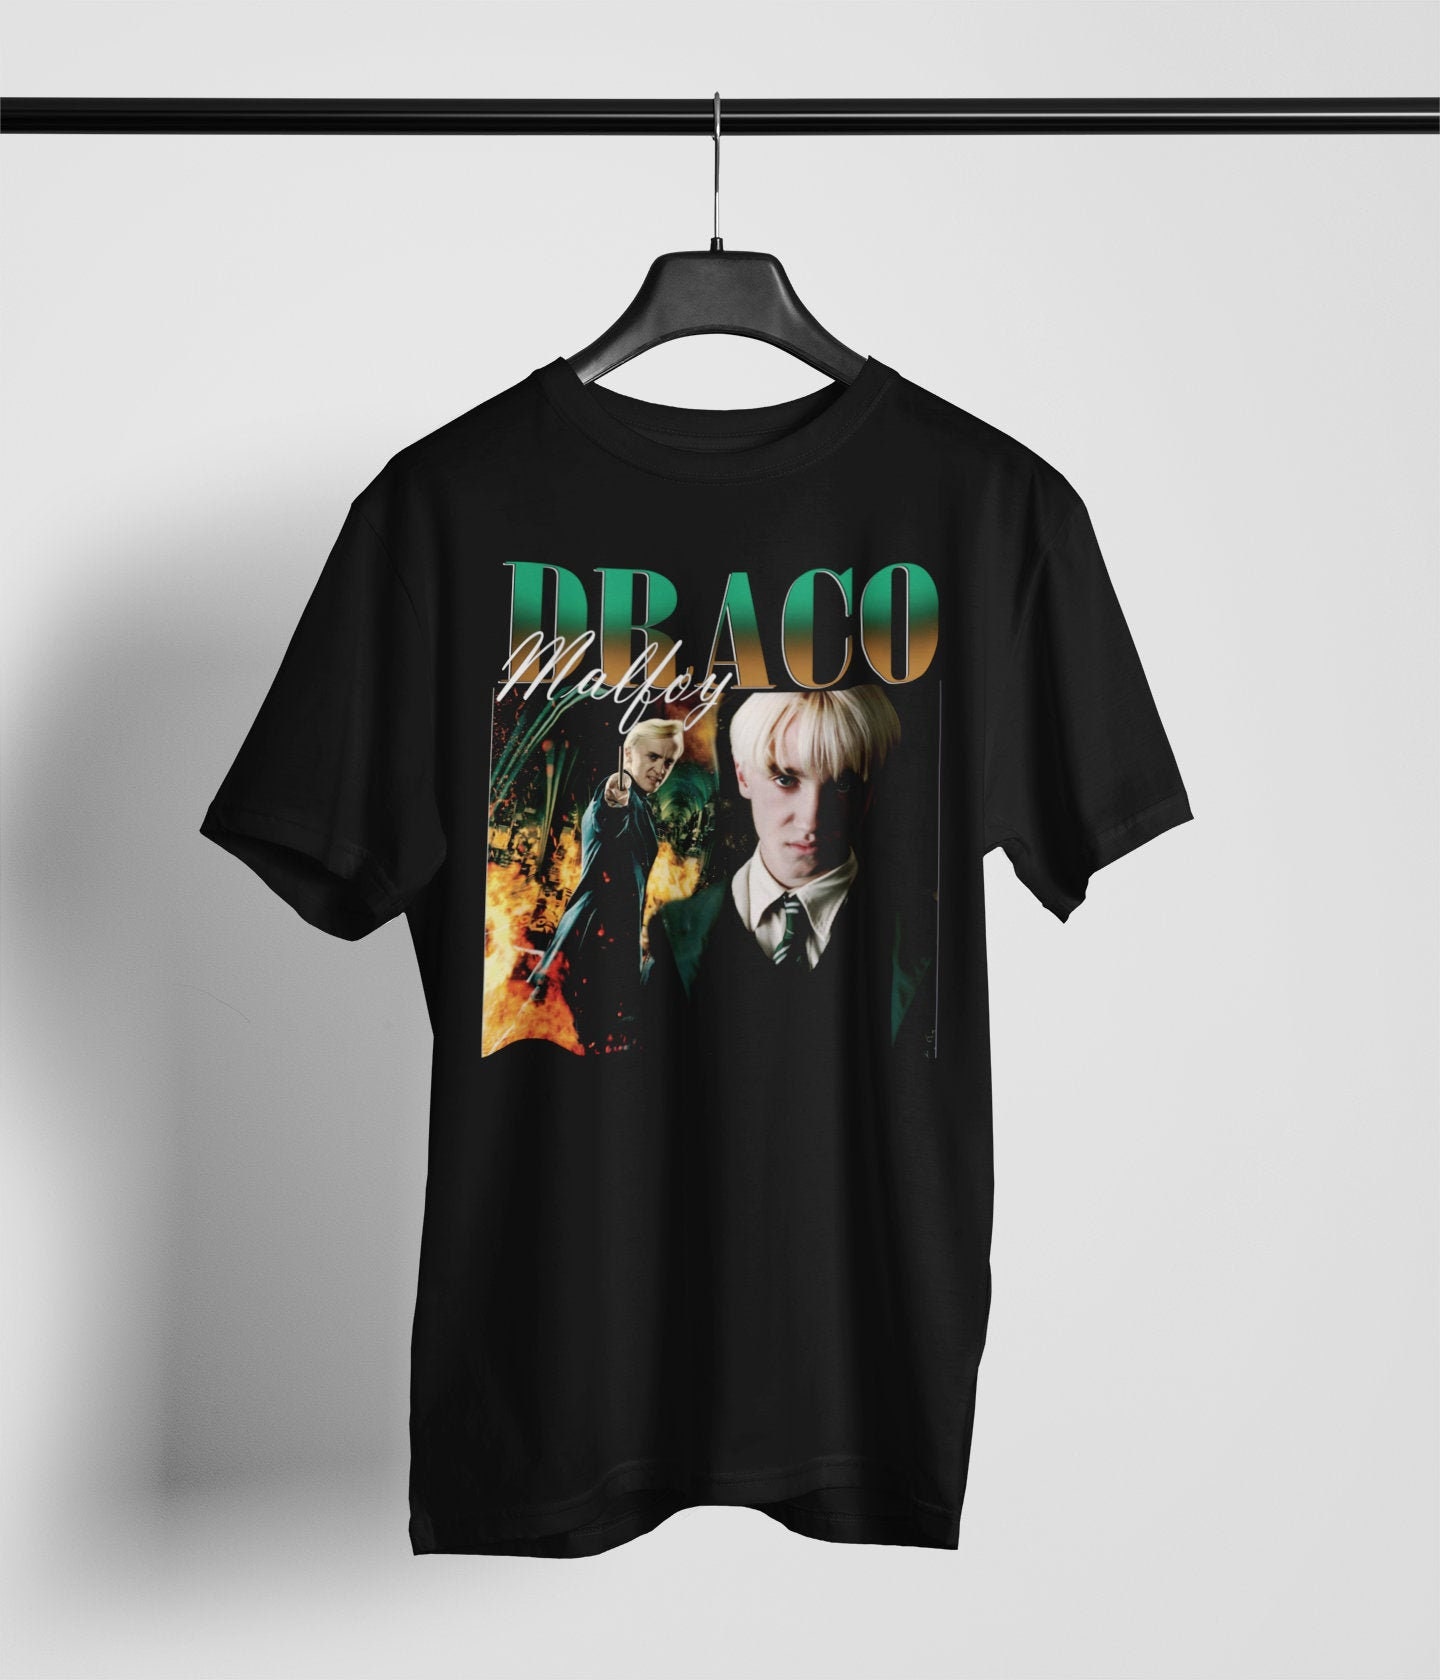 Discover Maglietta T-Shirt Tom Felton Uomo Donna Bambini Draco Malfoy Vintage Inspired 90s Bootleg Rap